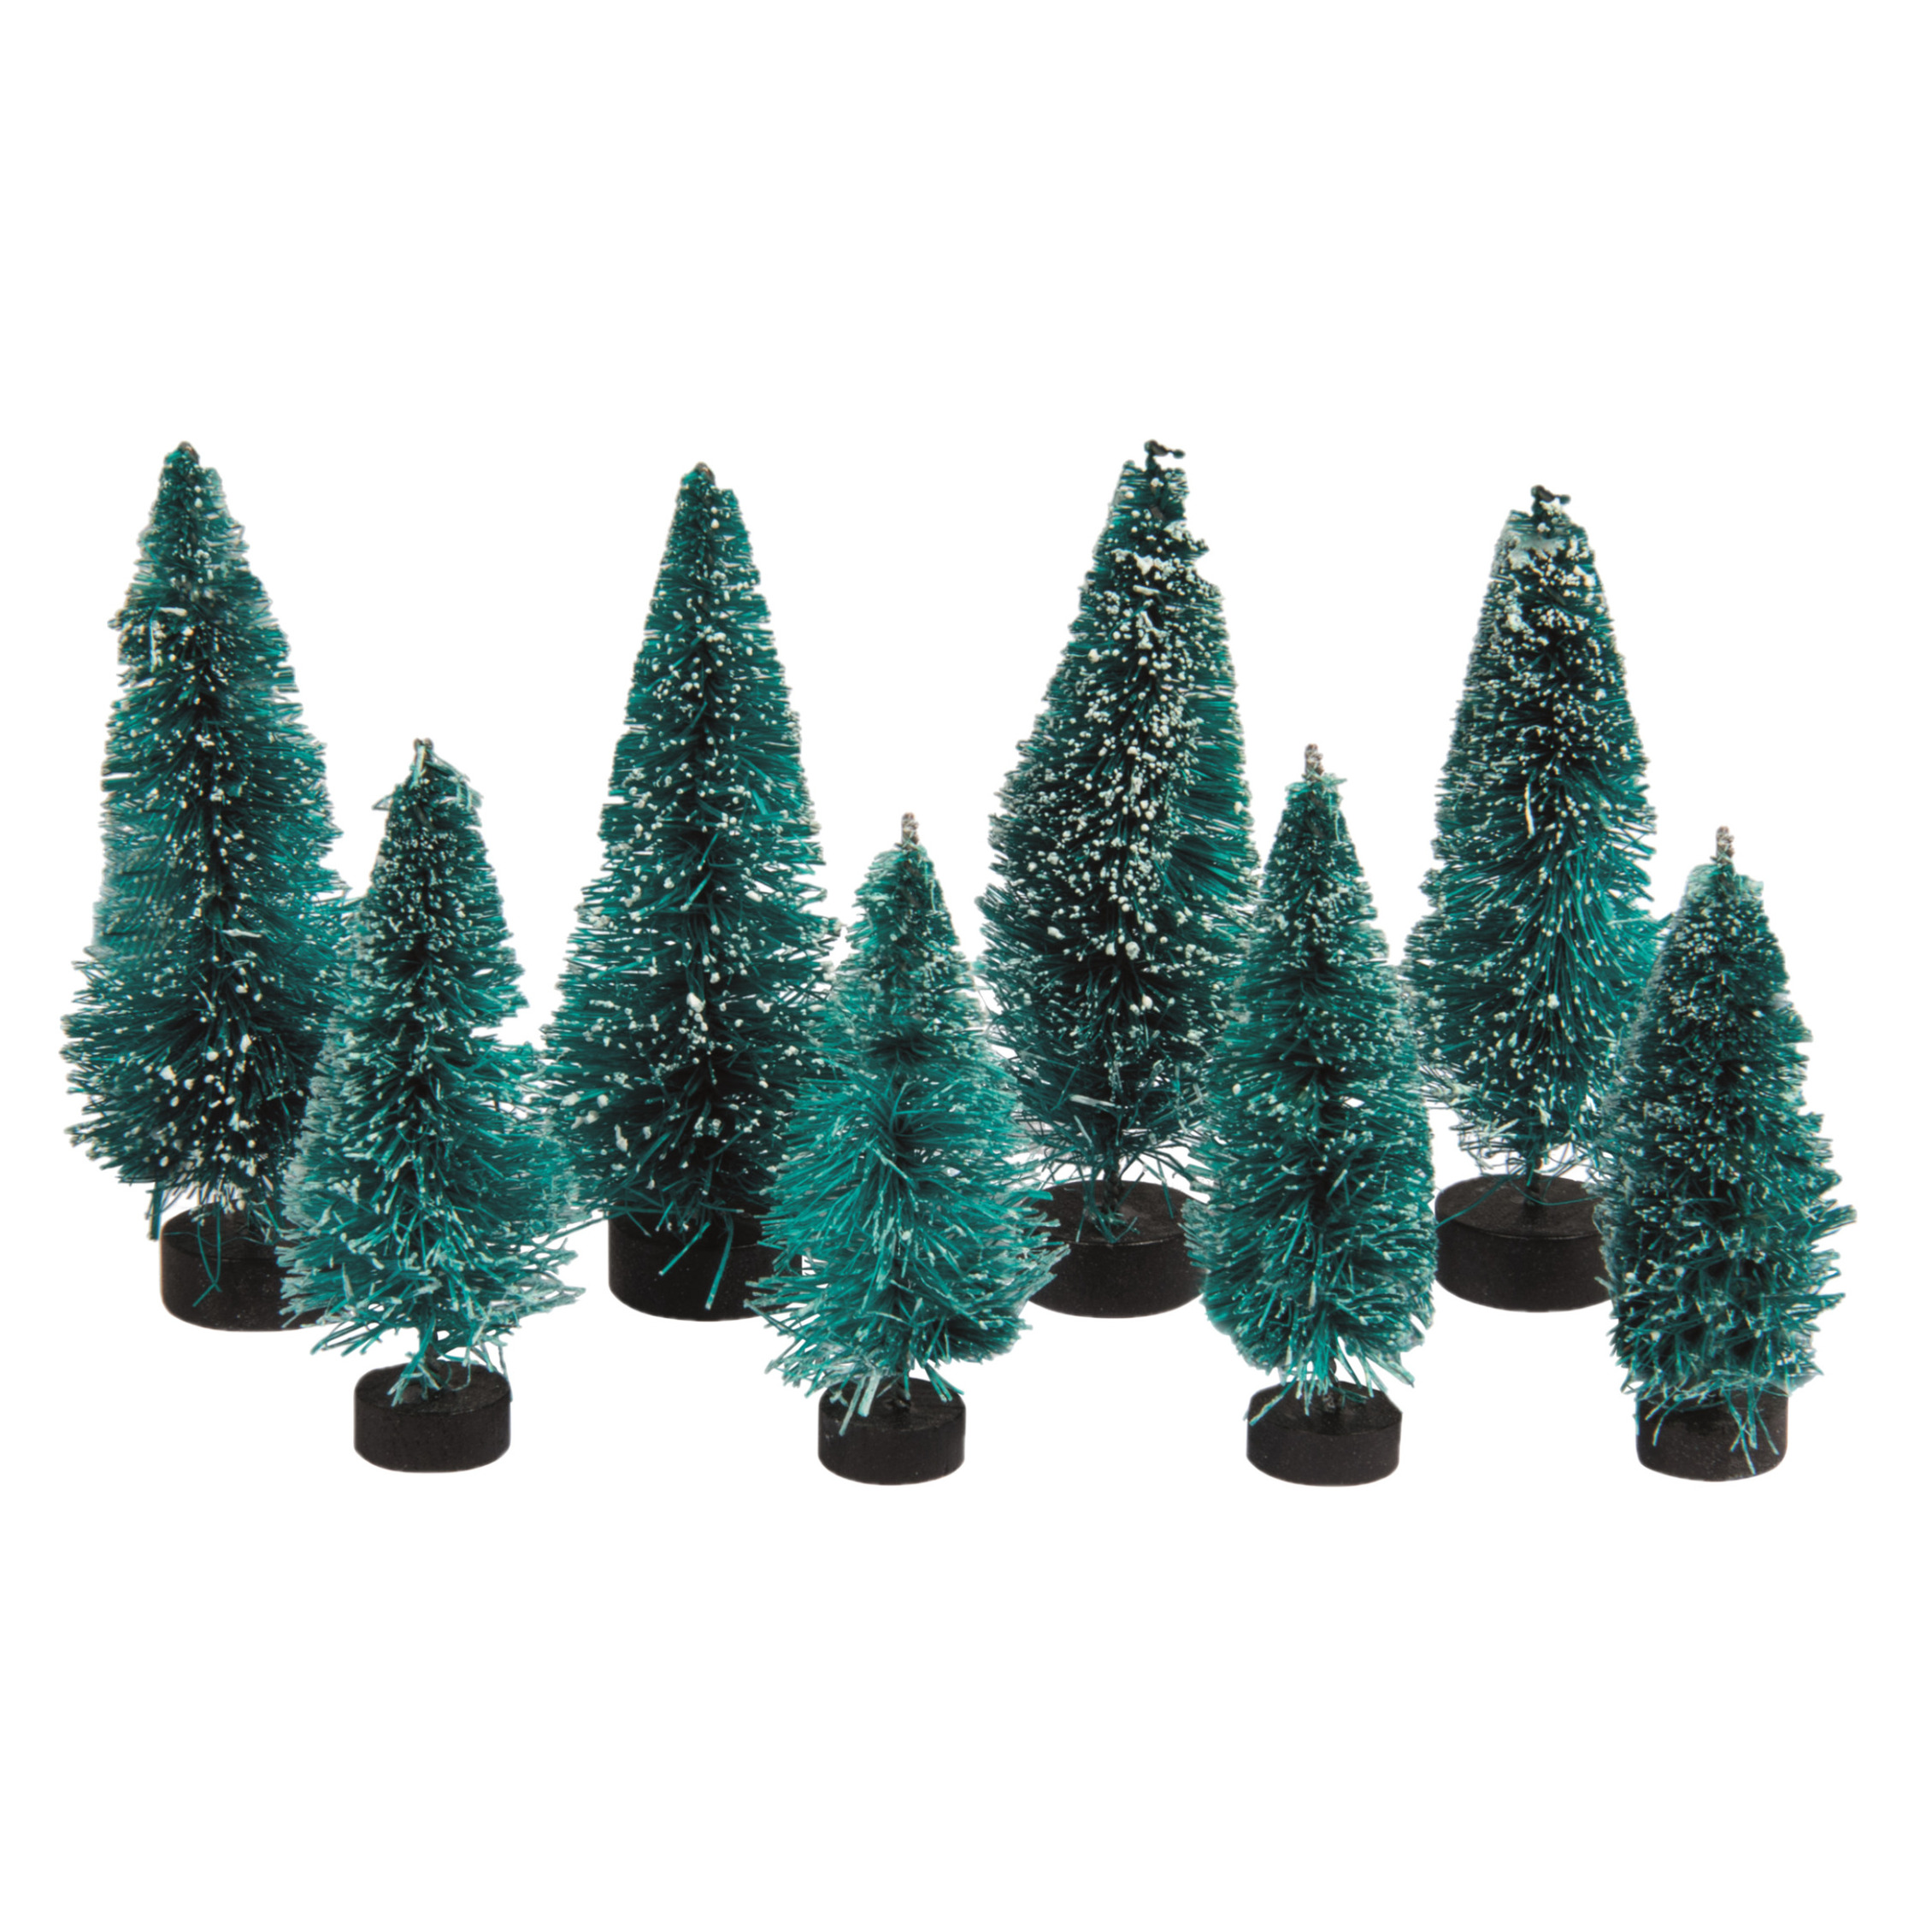 Kerstdorp boompjes-kerstboompjes 16x st 5 en 7 cm -miniatuur kerstdorp accessoires